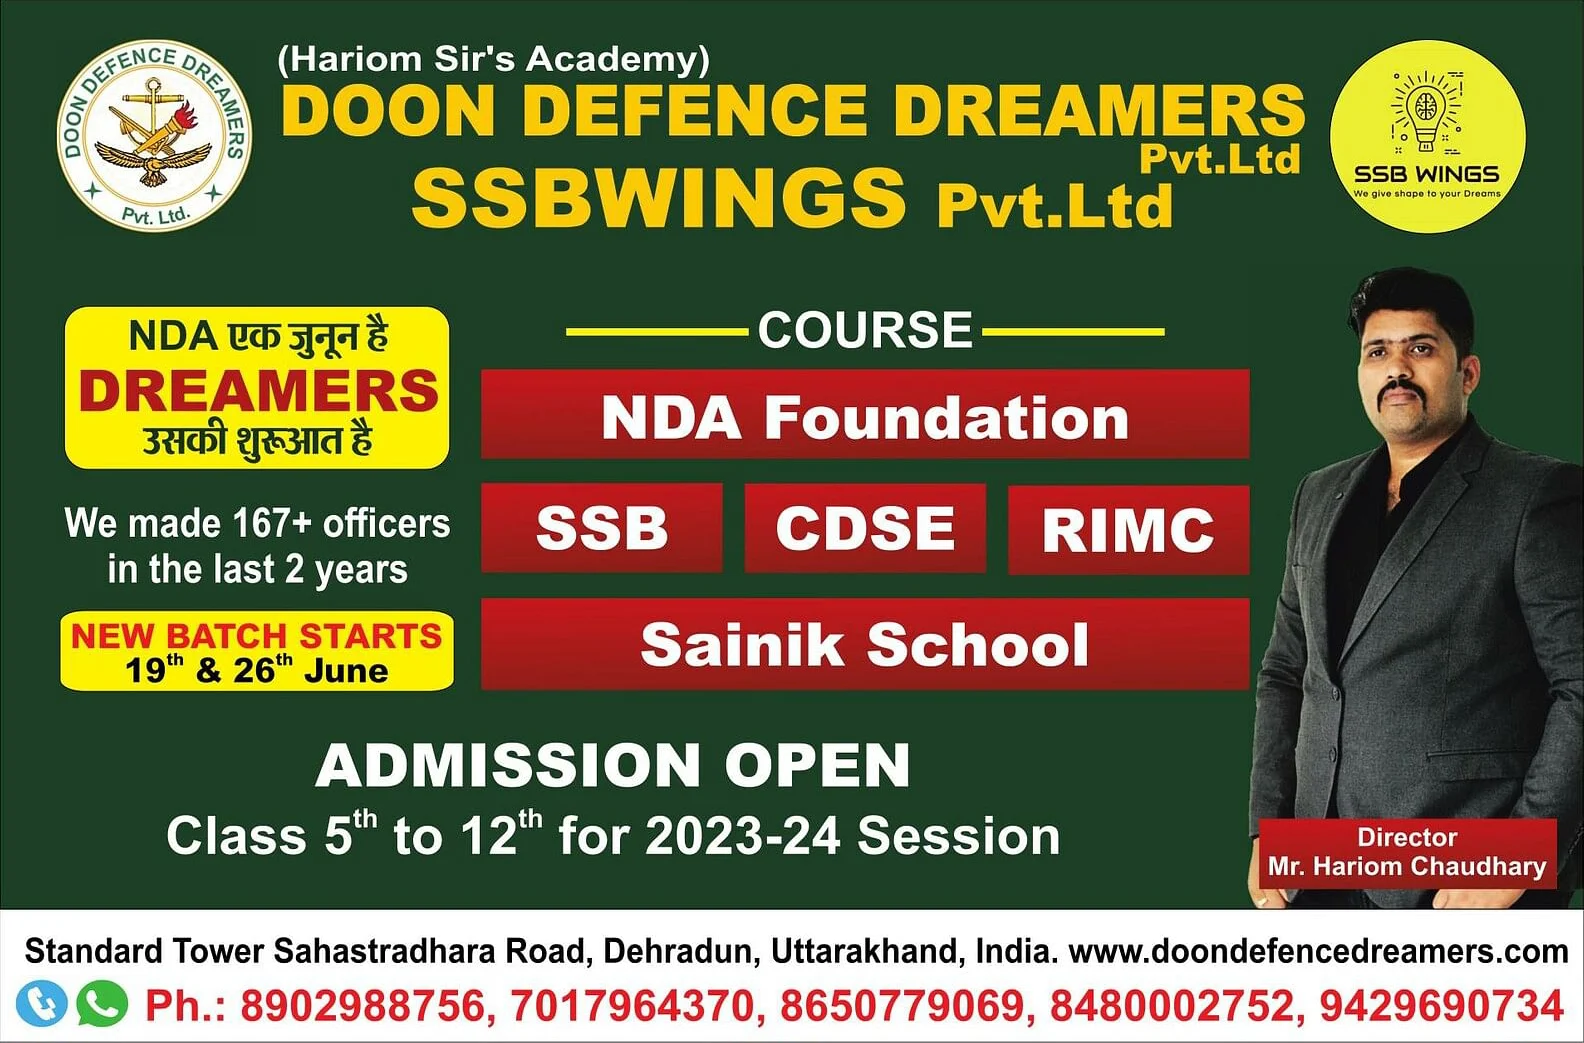 Doon Defence Dreamer Pvt. Ltd